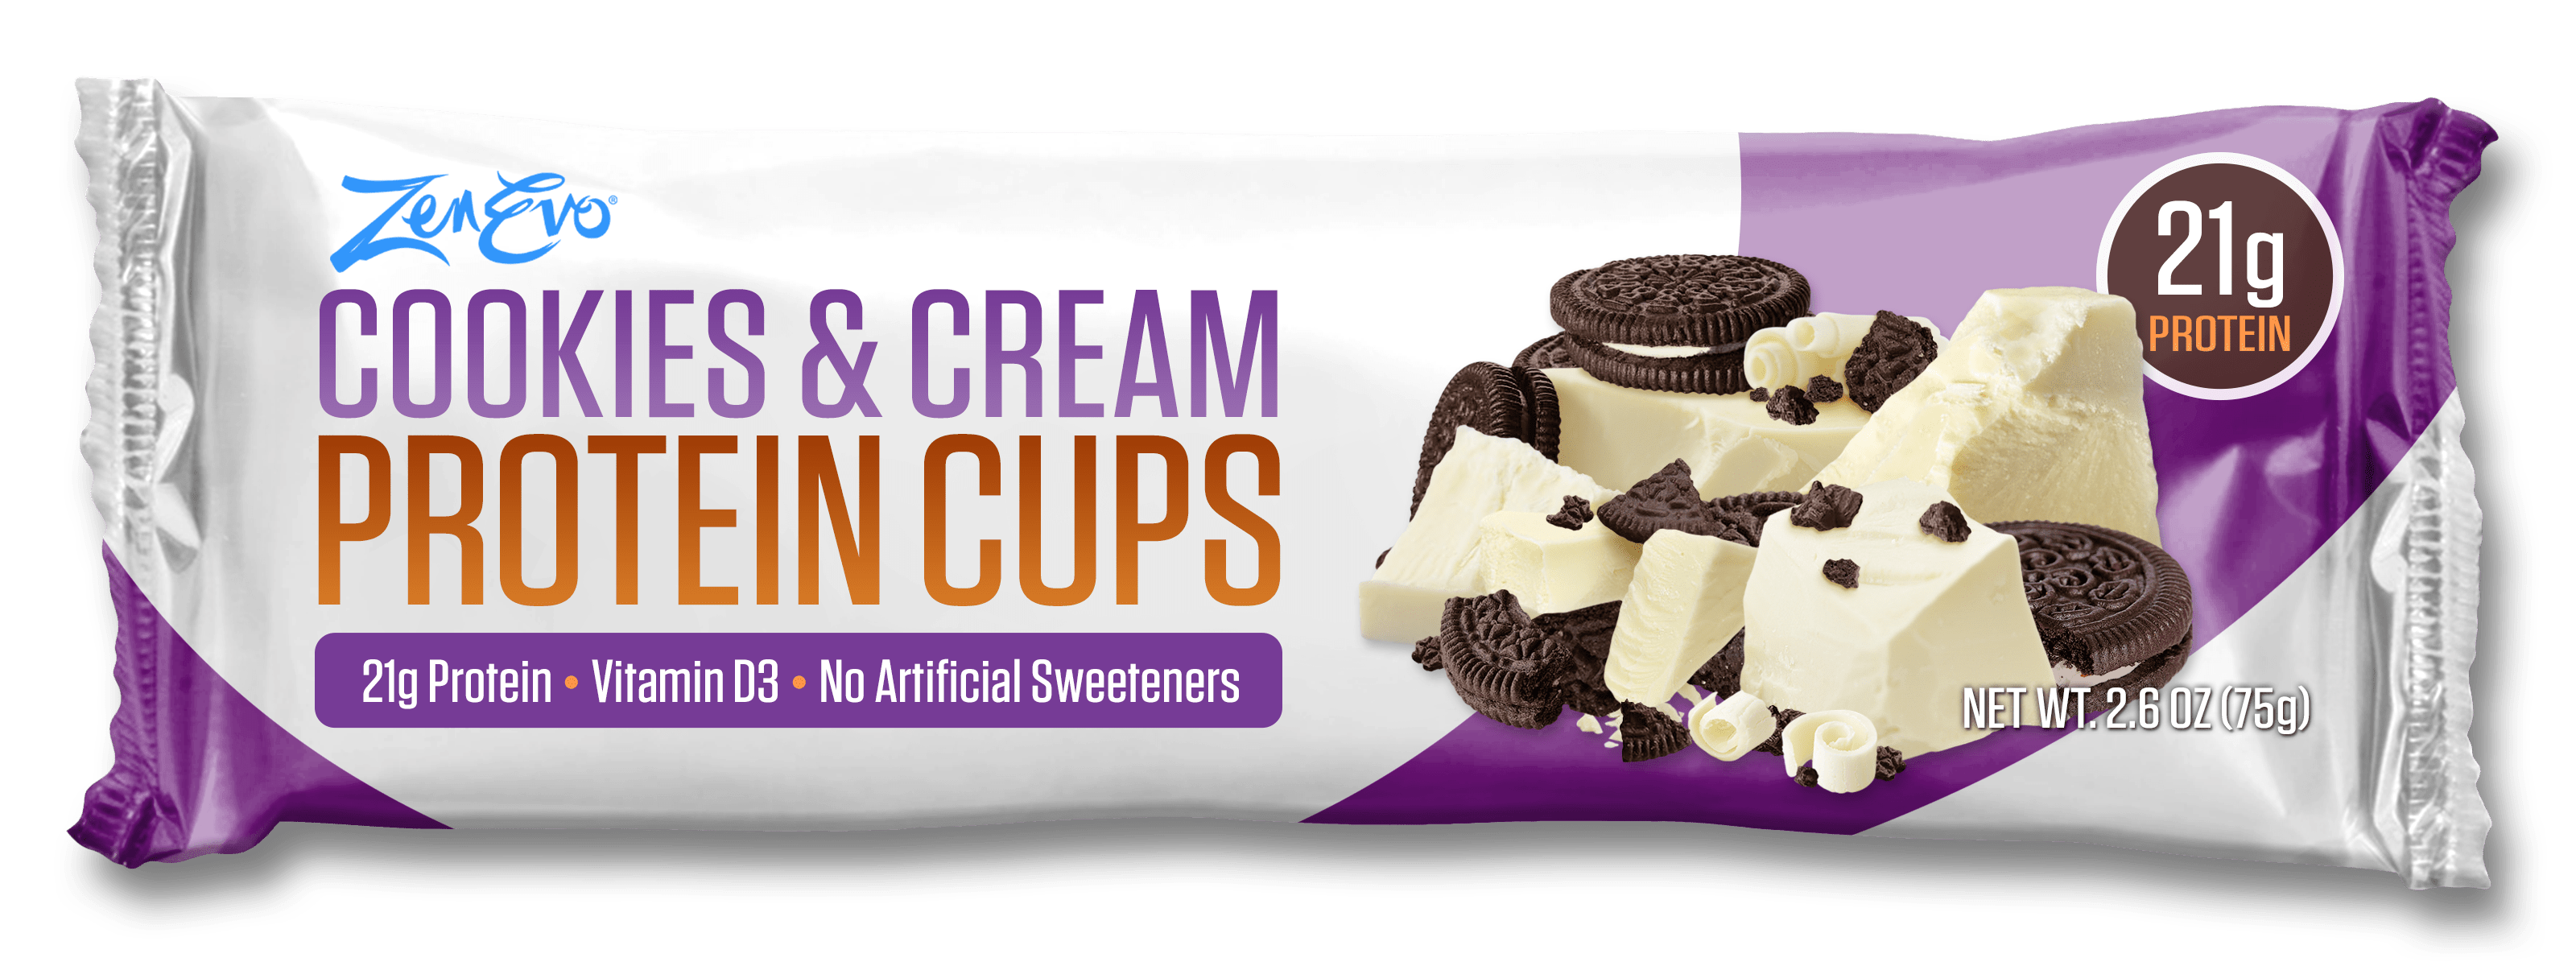 ZenEvo Cookies & Cream Protein Cups